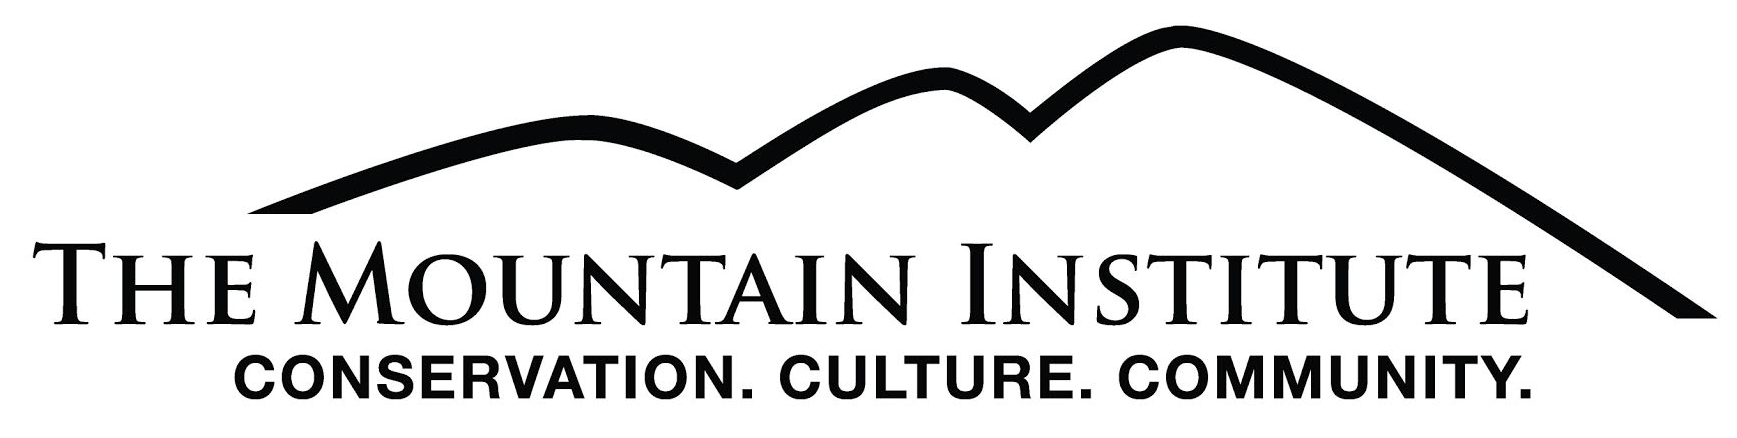 The Mountain Institute